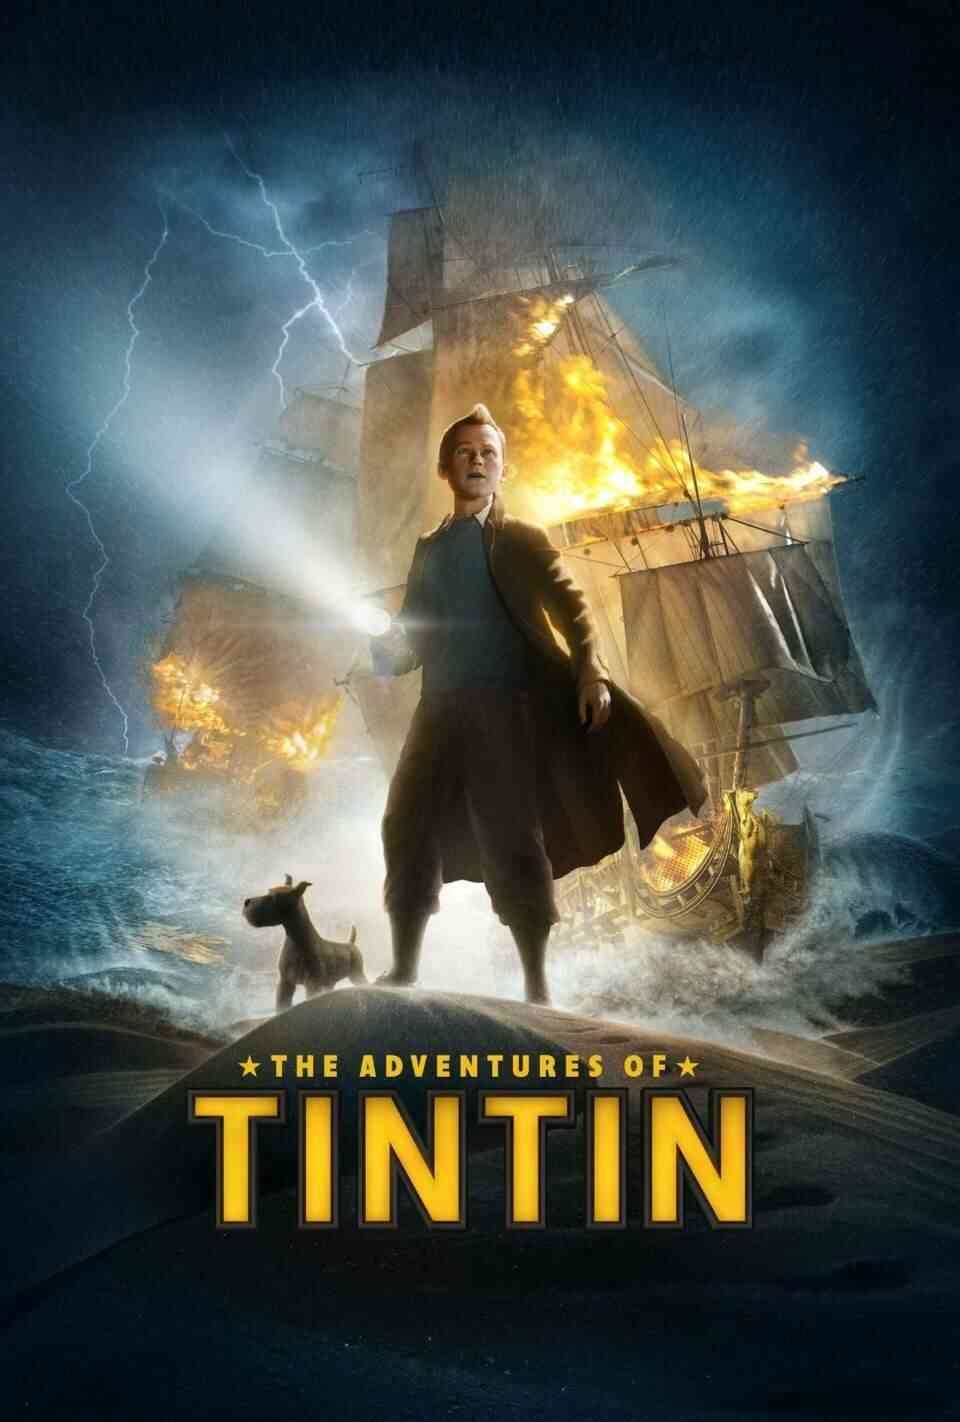 Read The Adventures of TinTin screenplay.